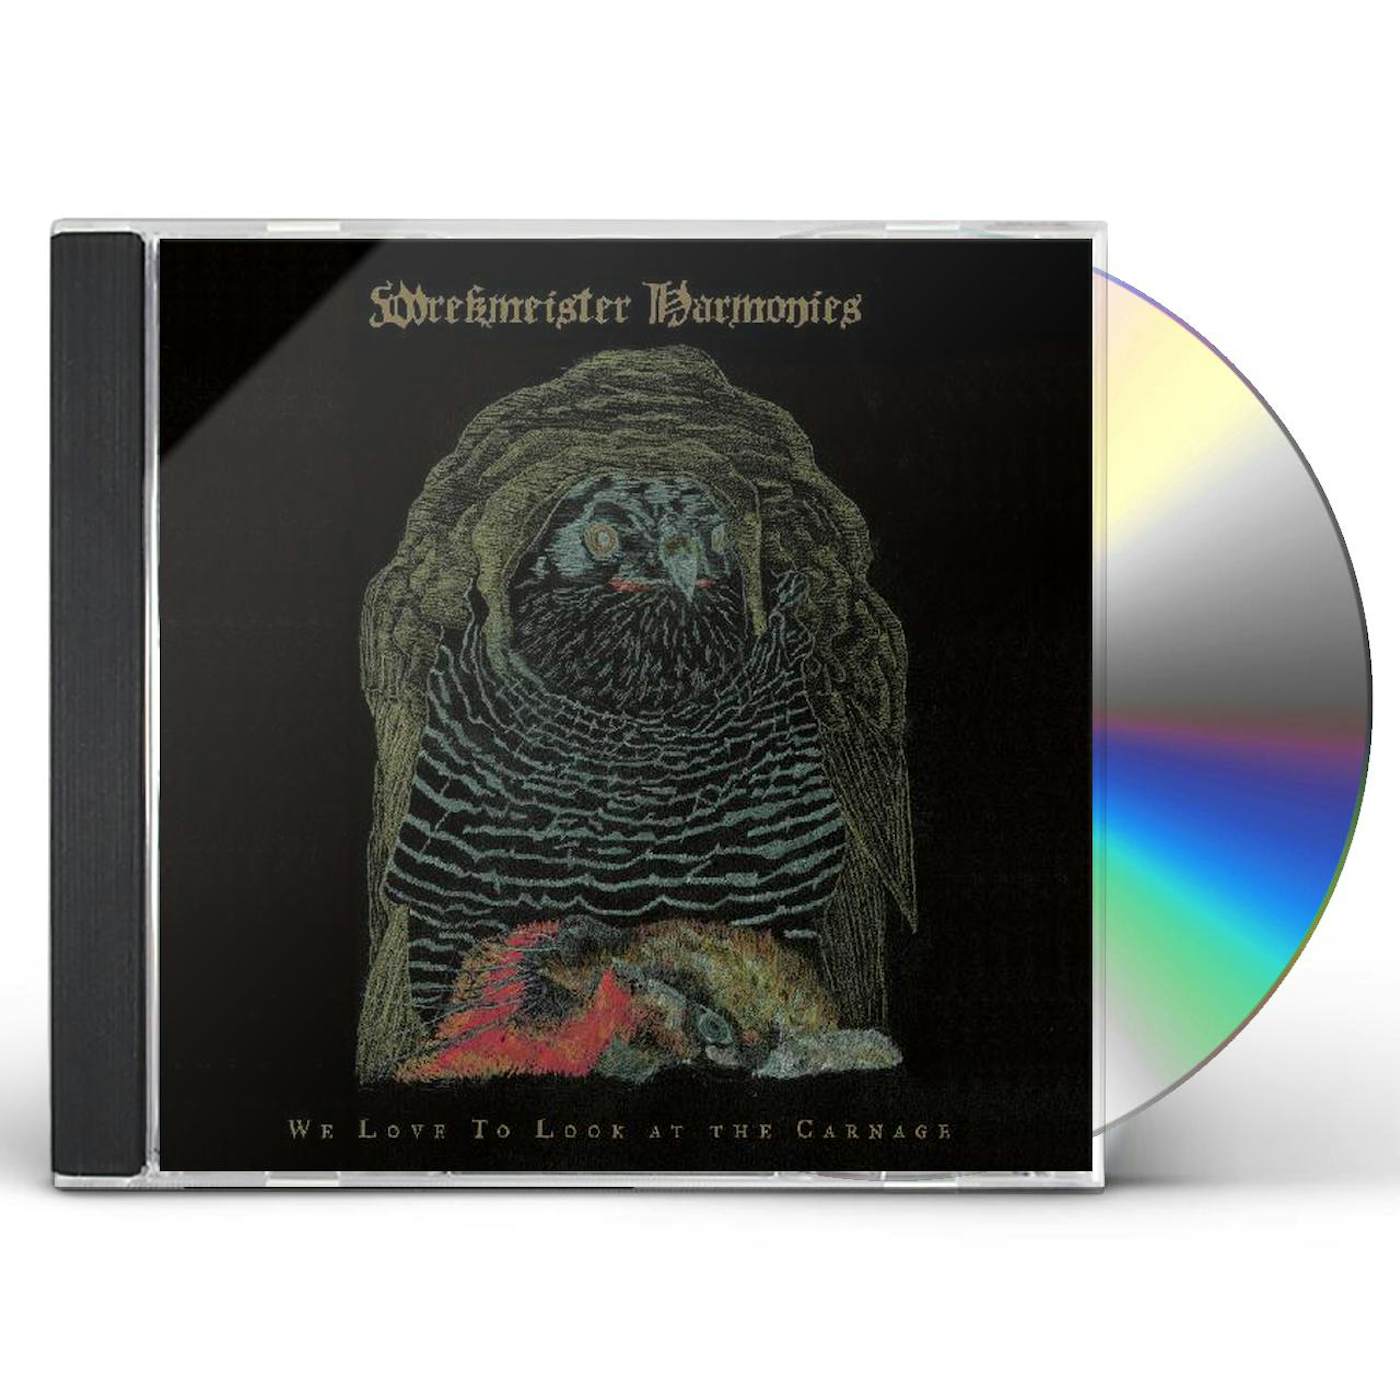 Wrekmeister Harmonies WE LOVE TO LOOK AT THE CARNAGE CD